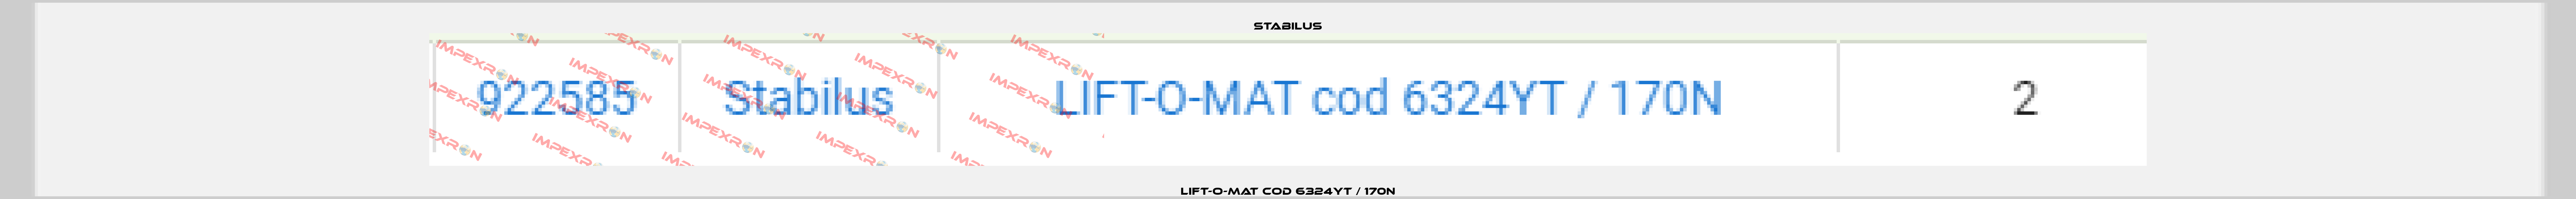 LIFT-O-MAT cod 6324YT / 170N Stabilus